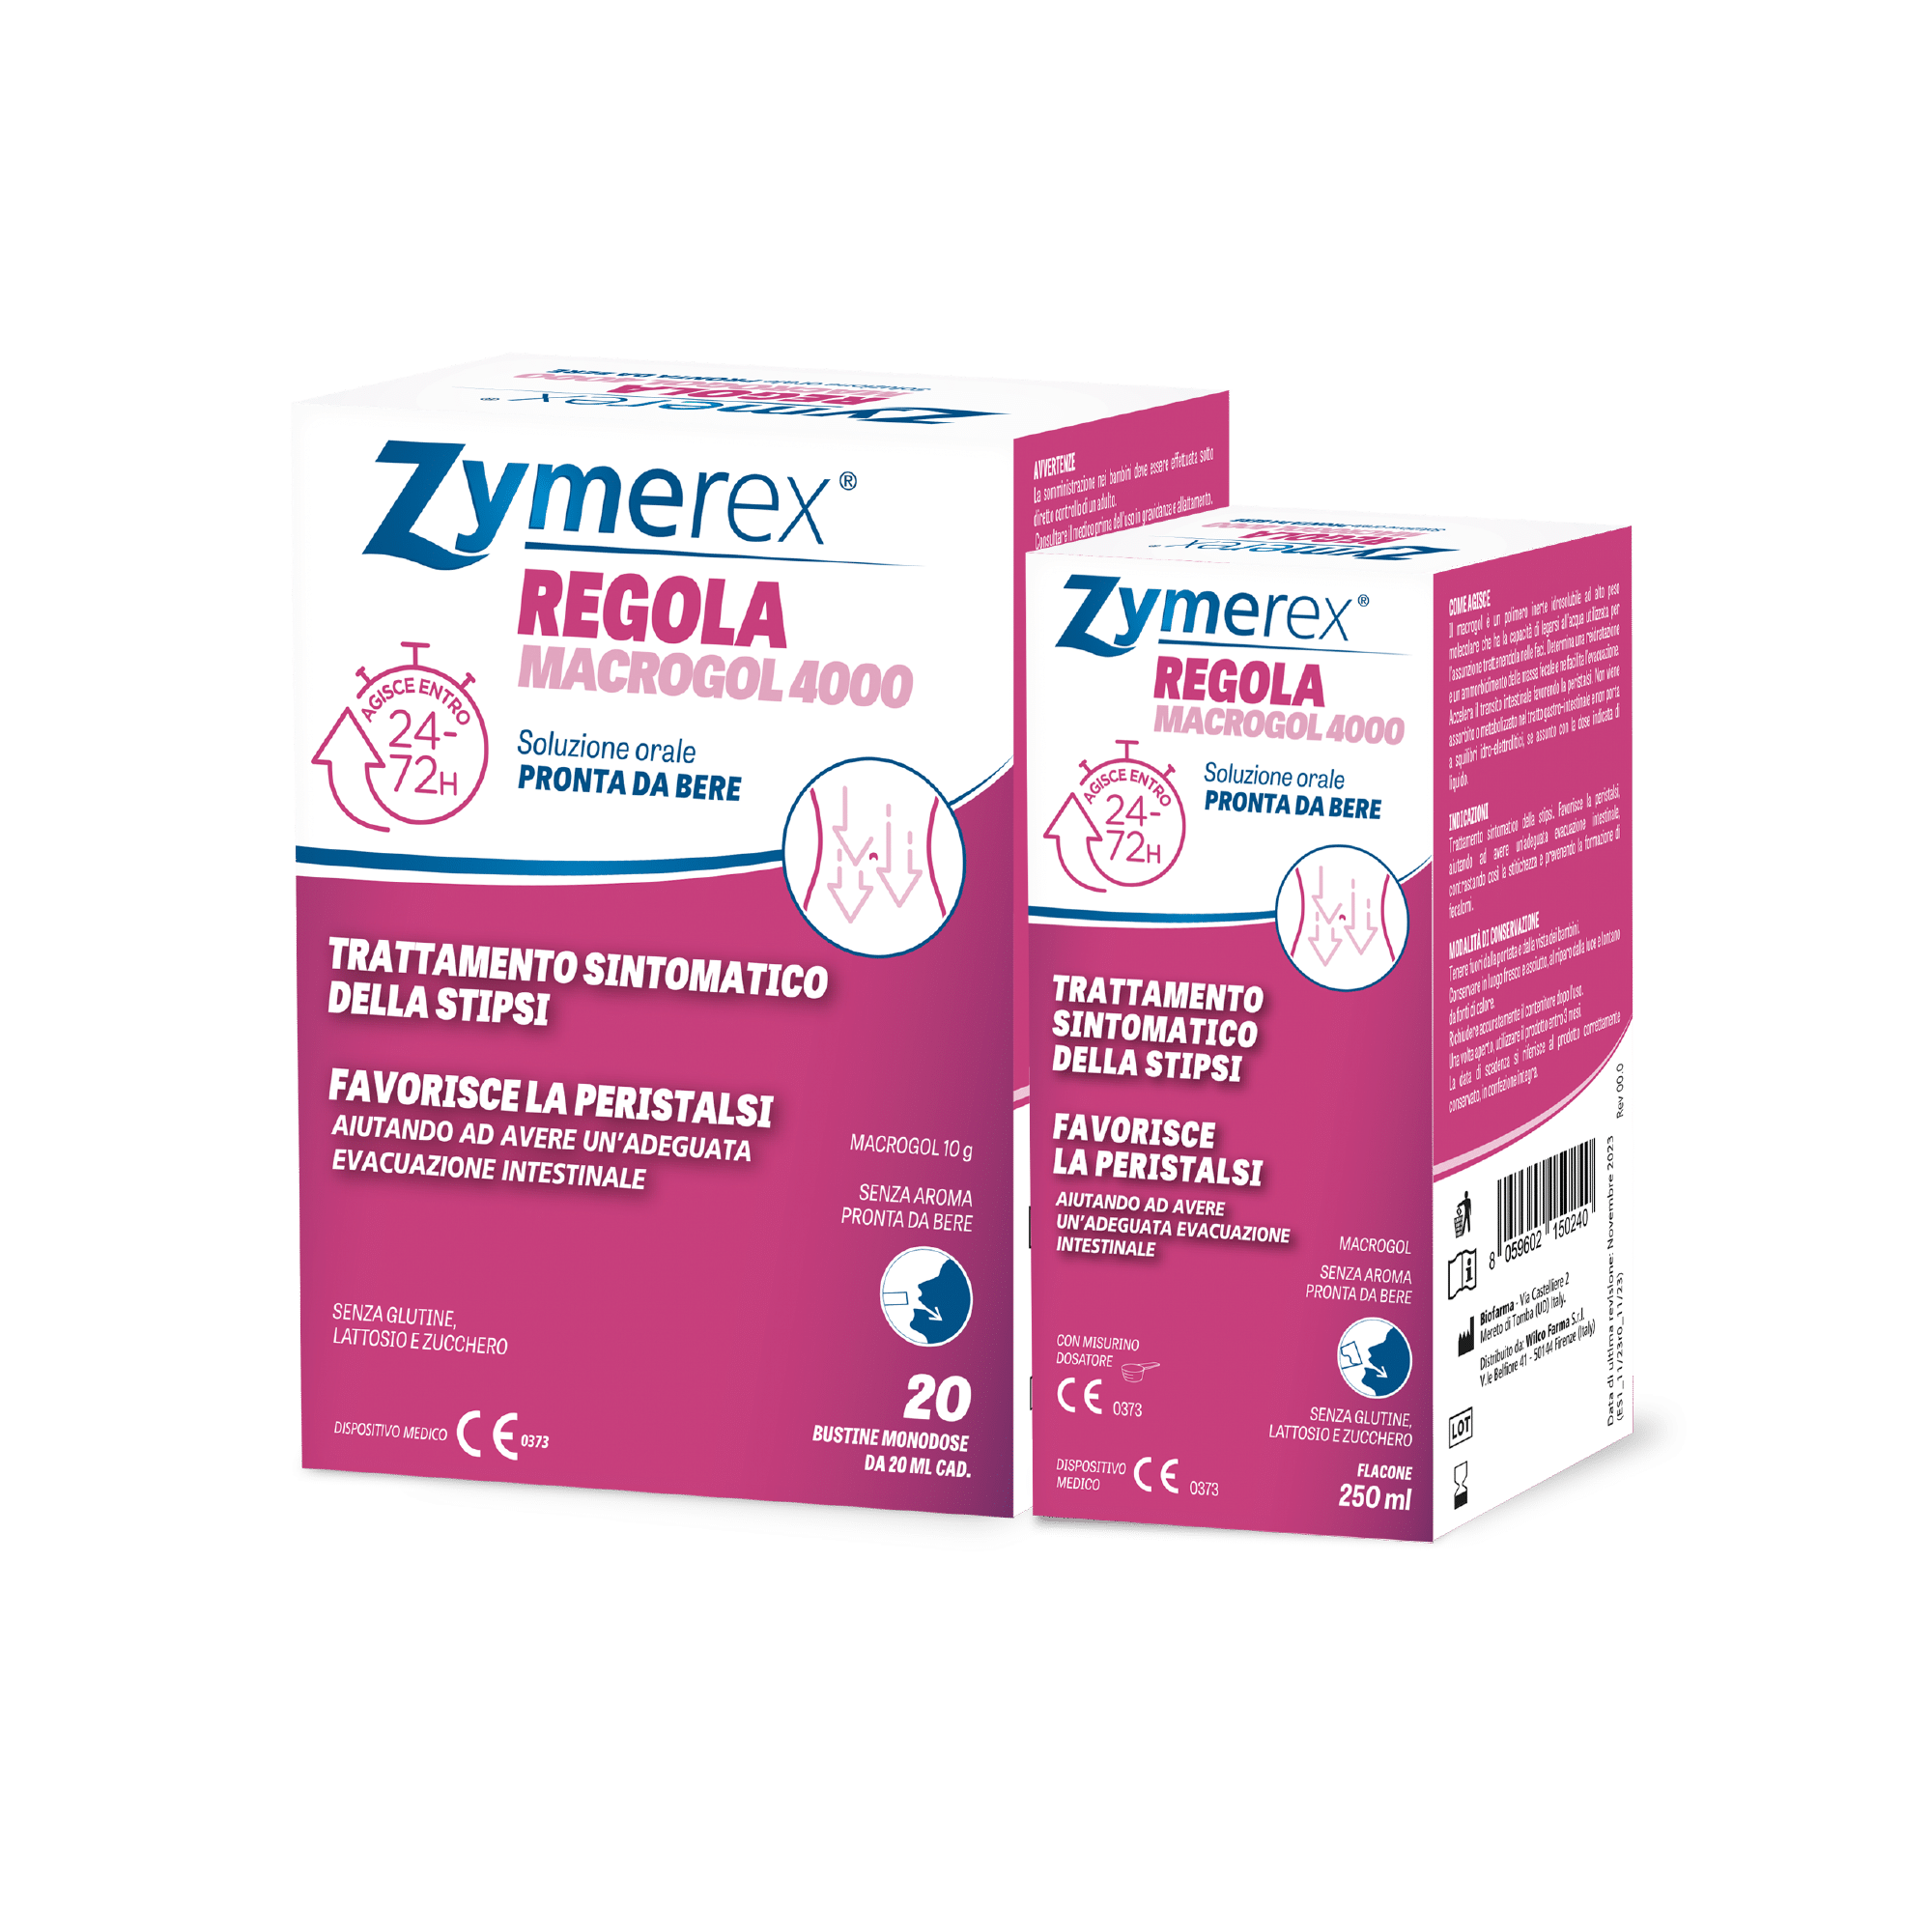 Zymerex Regola Macrogol 4000